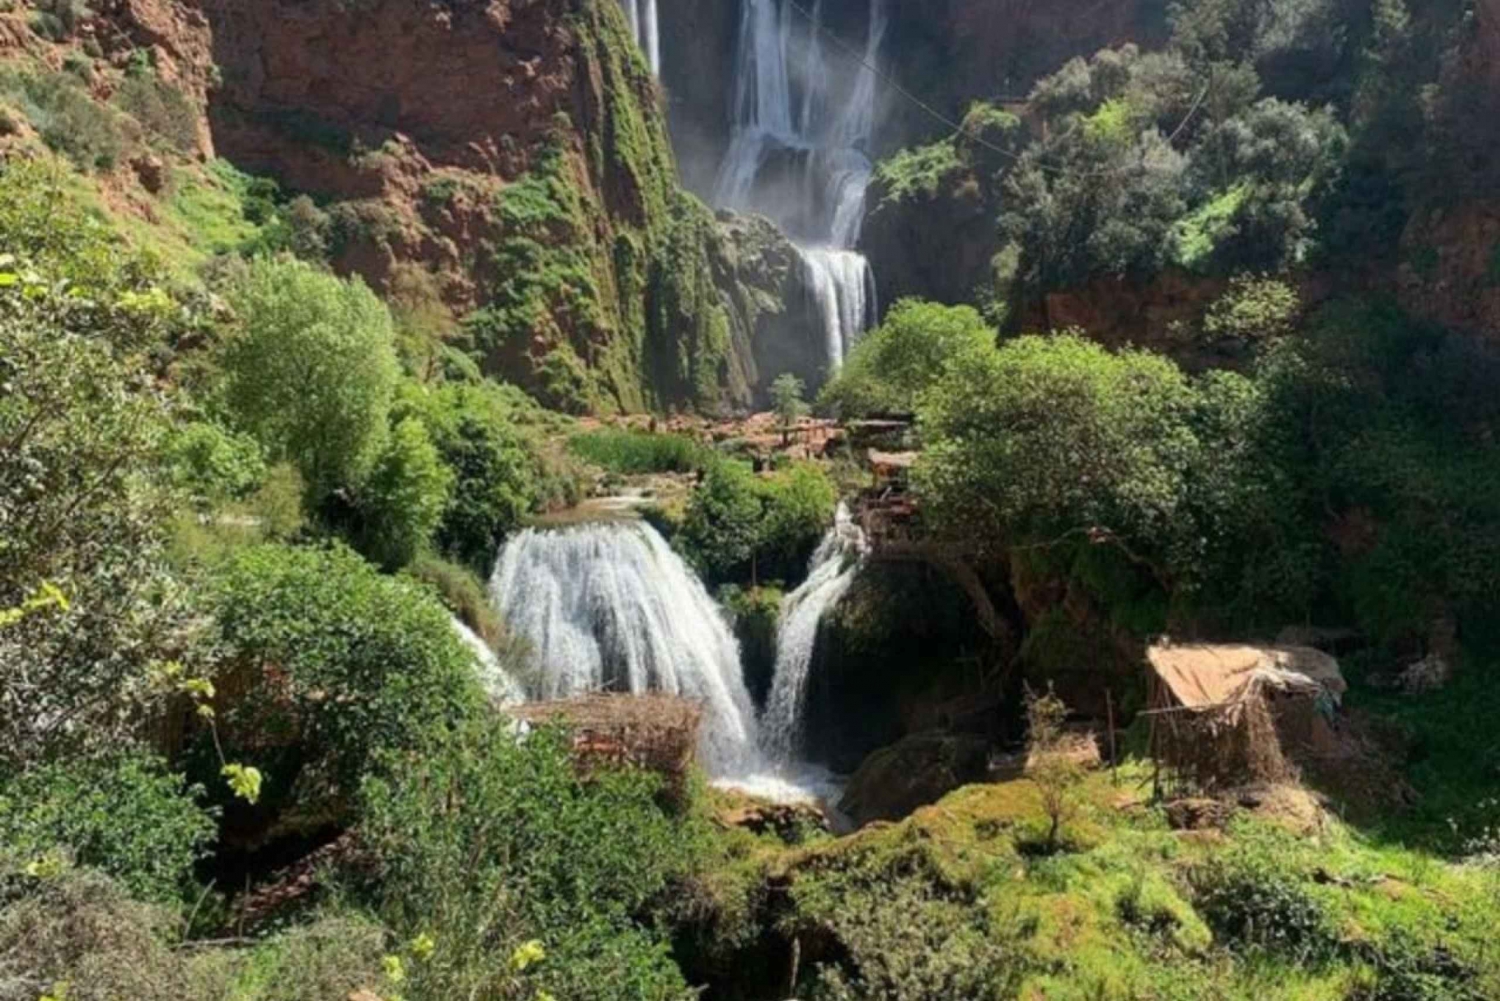 Marrakech: Ouzoud Falls, Guided Mountain Hike & Boat Tour